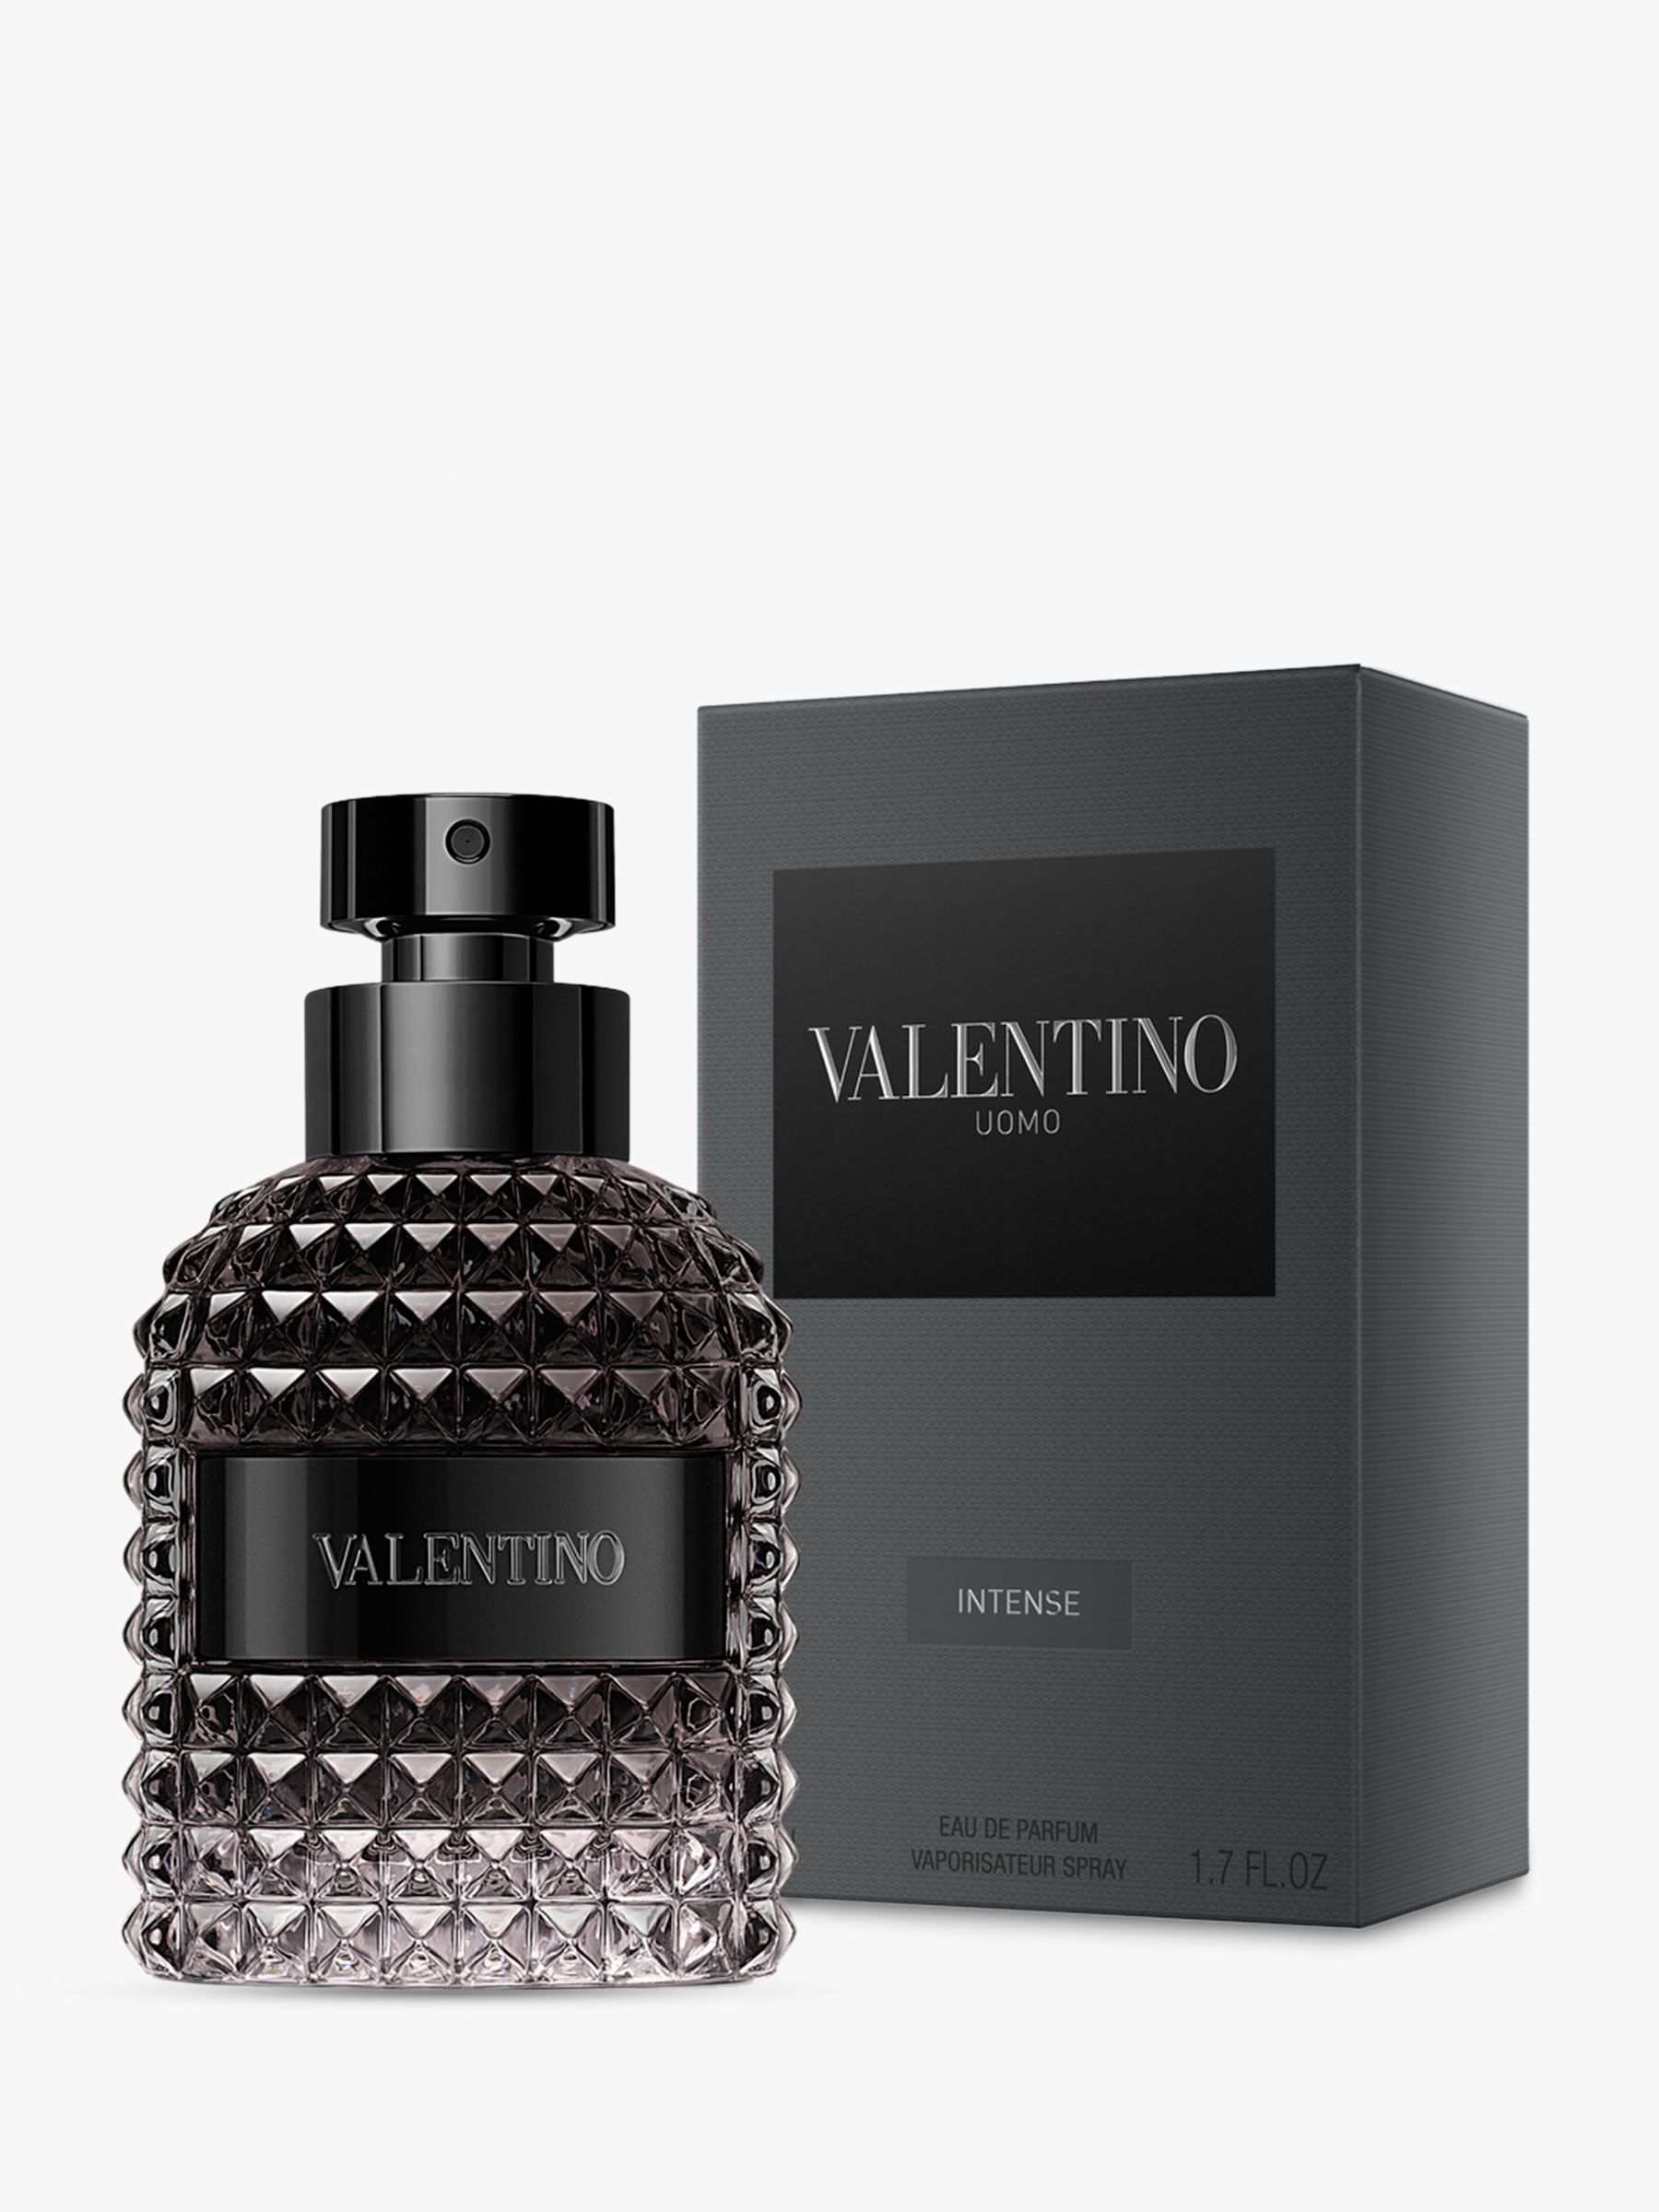 Valentino Uomo Eau de Parfum Intense, 50ml 3